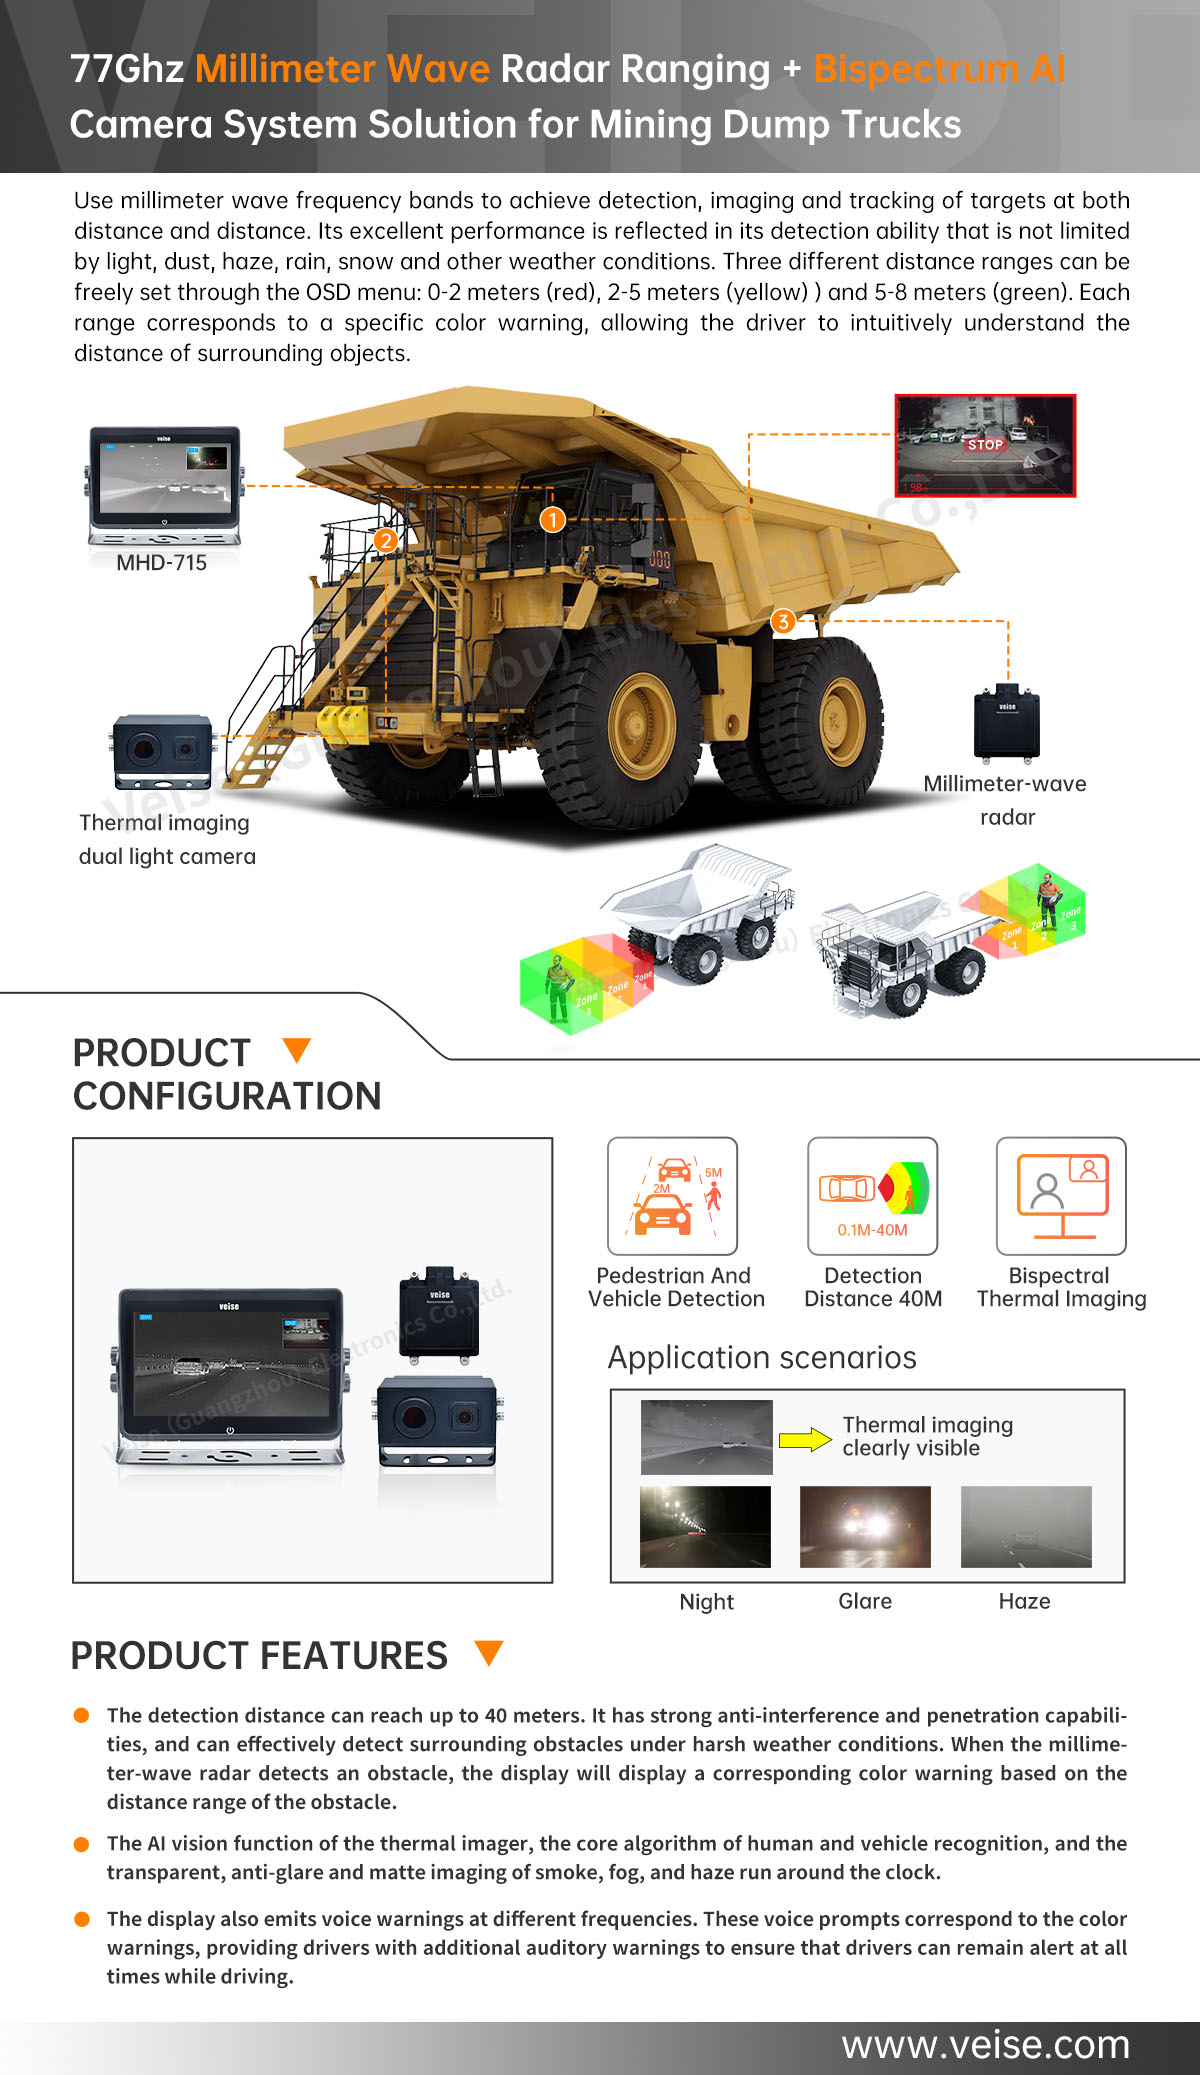 77Ghz Millimeter Wave Radar Ranging + Bispectrum AI Camera System Solution for Mining Dump Trucks